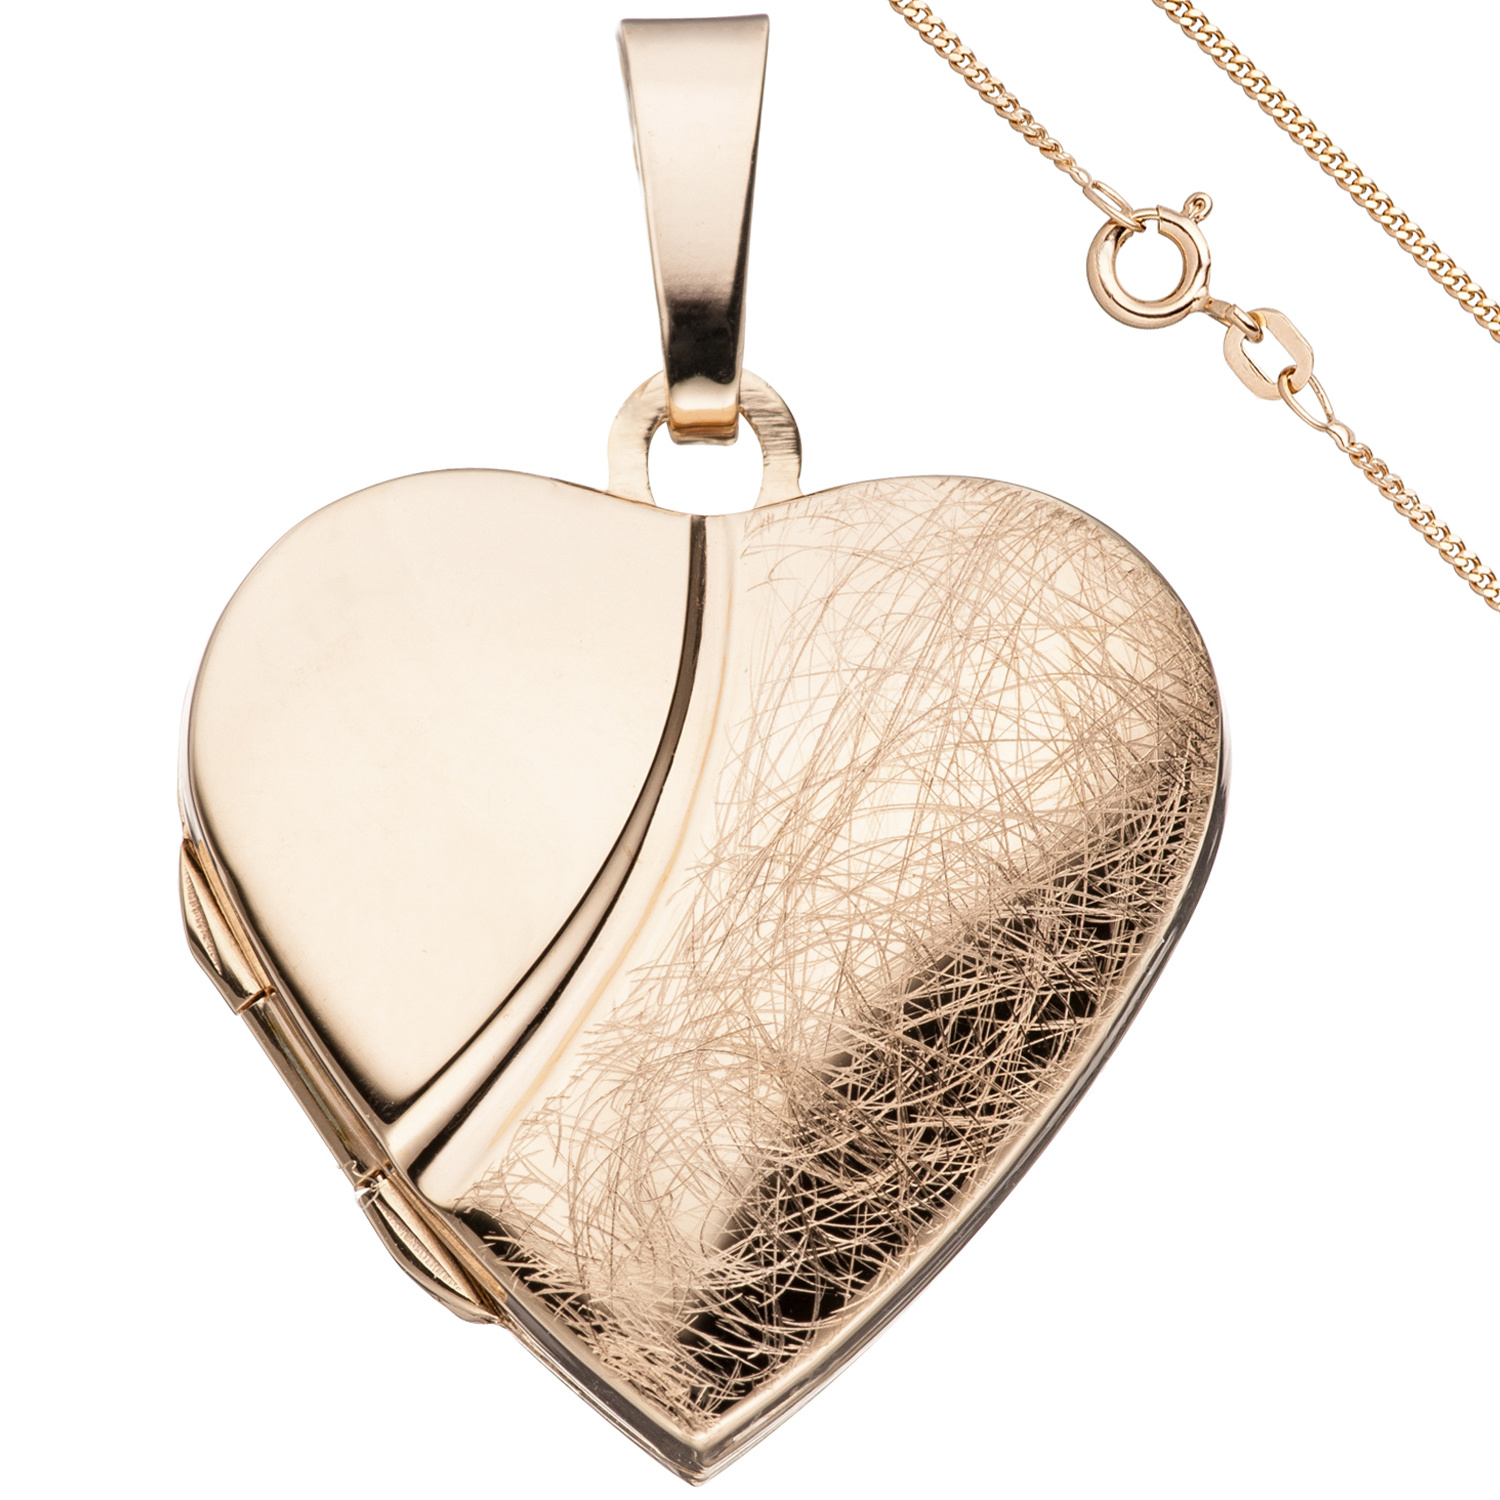 Medaillon Herz Anhänger Silber Kette 925 zum mit rosegold cm – vergoldet Öffnen 45